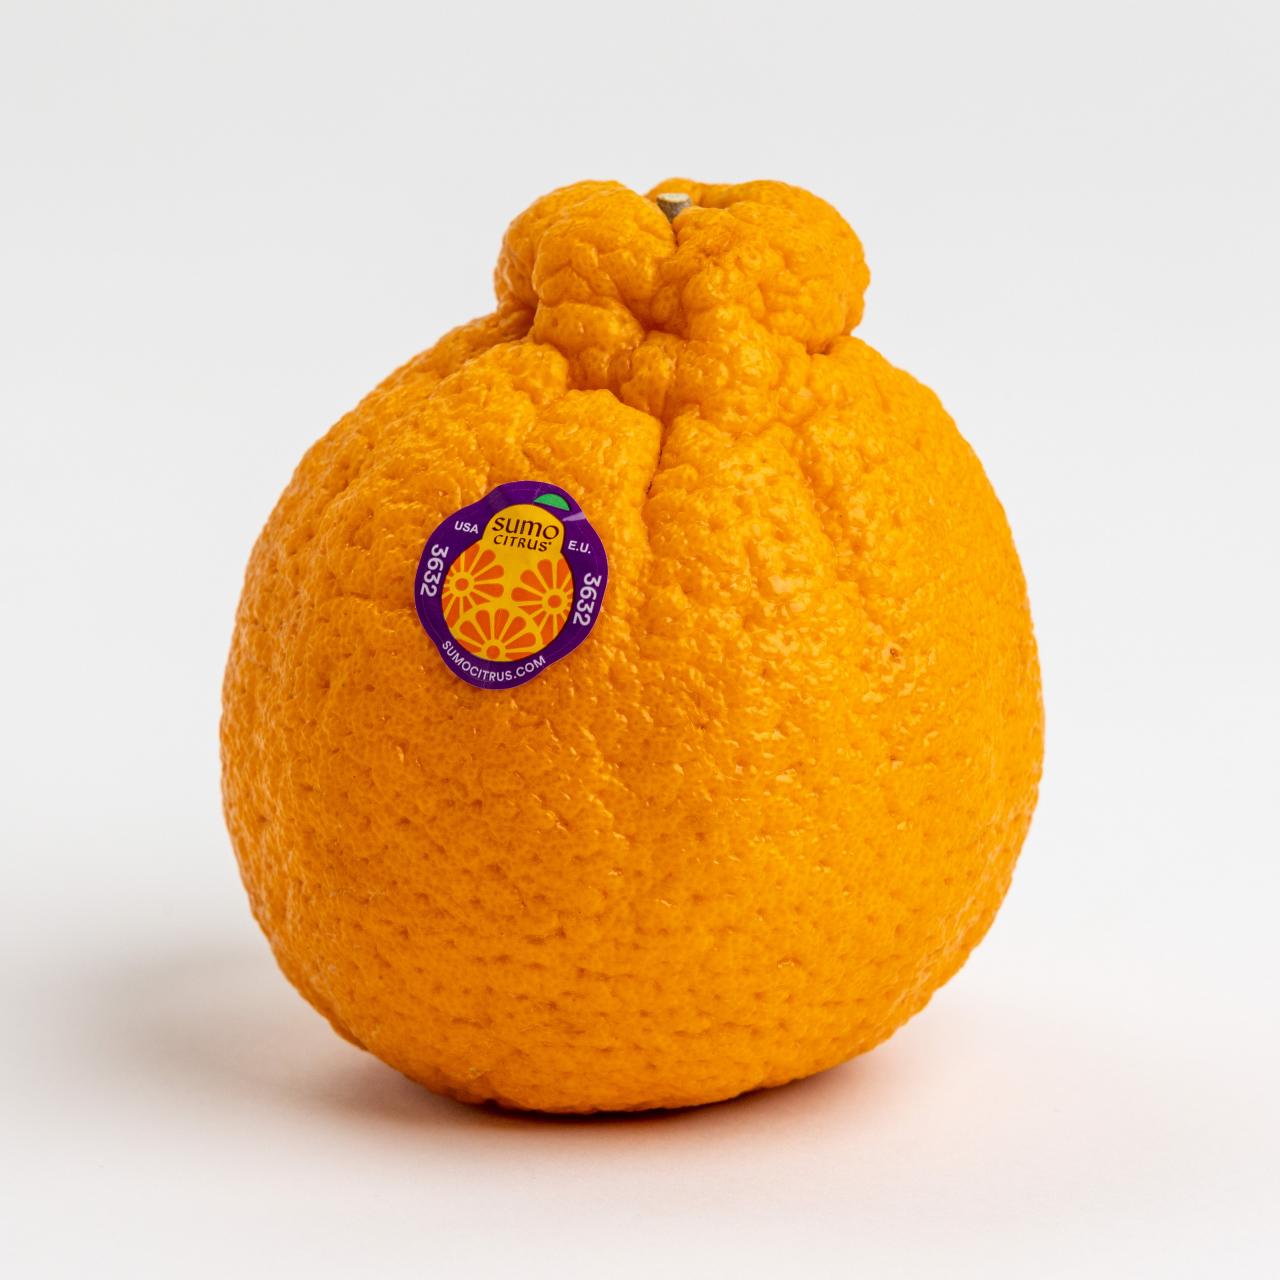 Sumo Citrus Mandarins [Where to Buy] - Eat Like No One Else